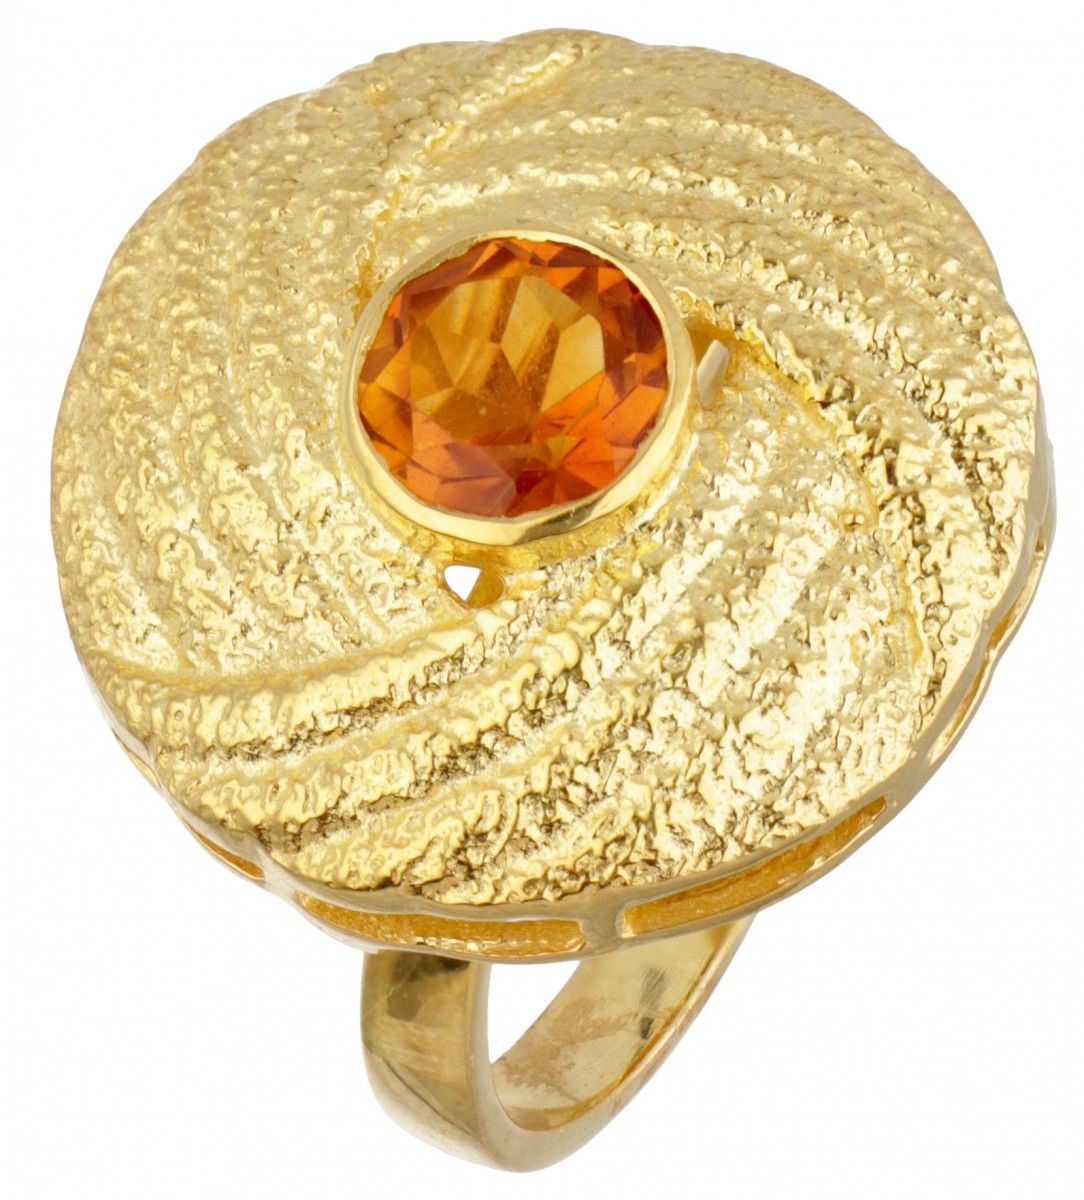 Gold plated silver ring set with citrine - 925/1000. Marchi: 925. Con un citrino&hellip;